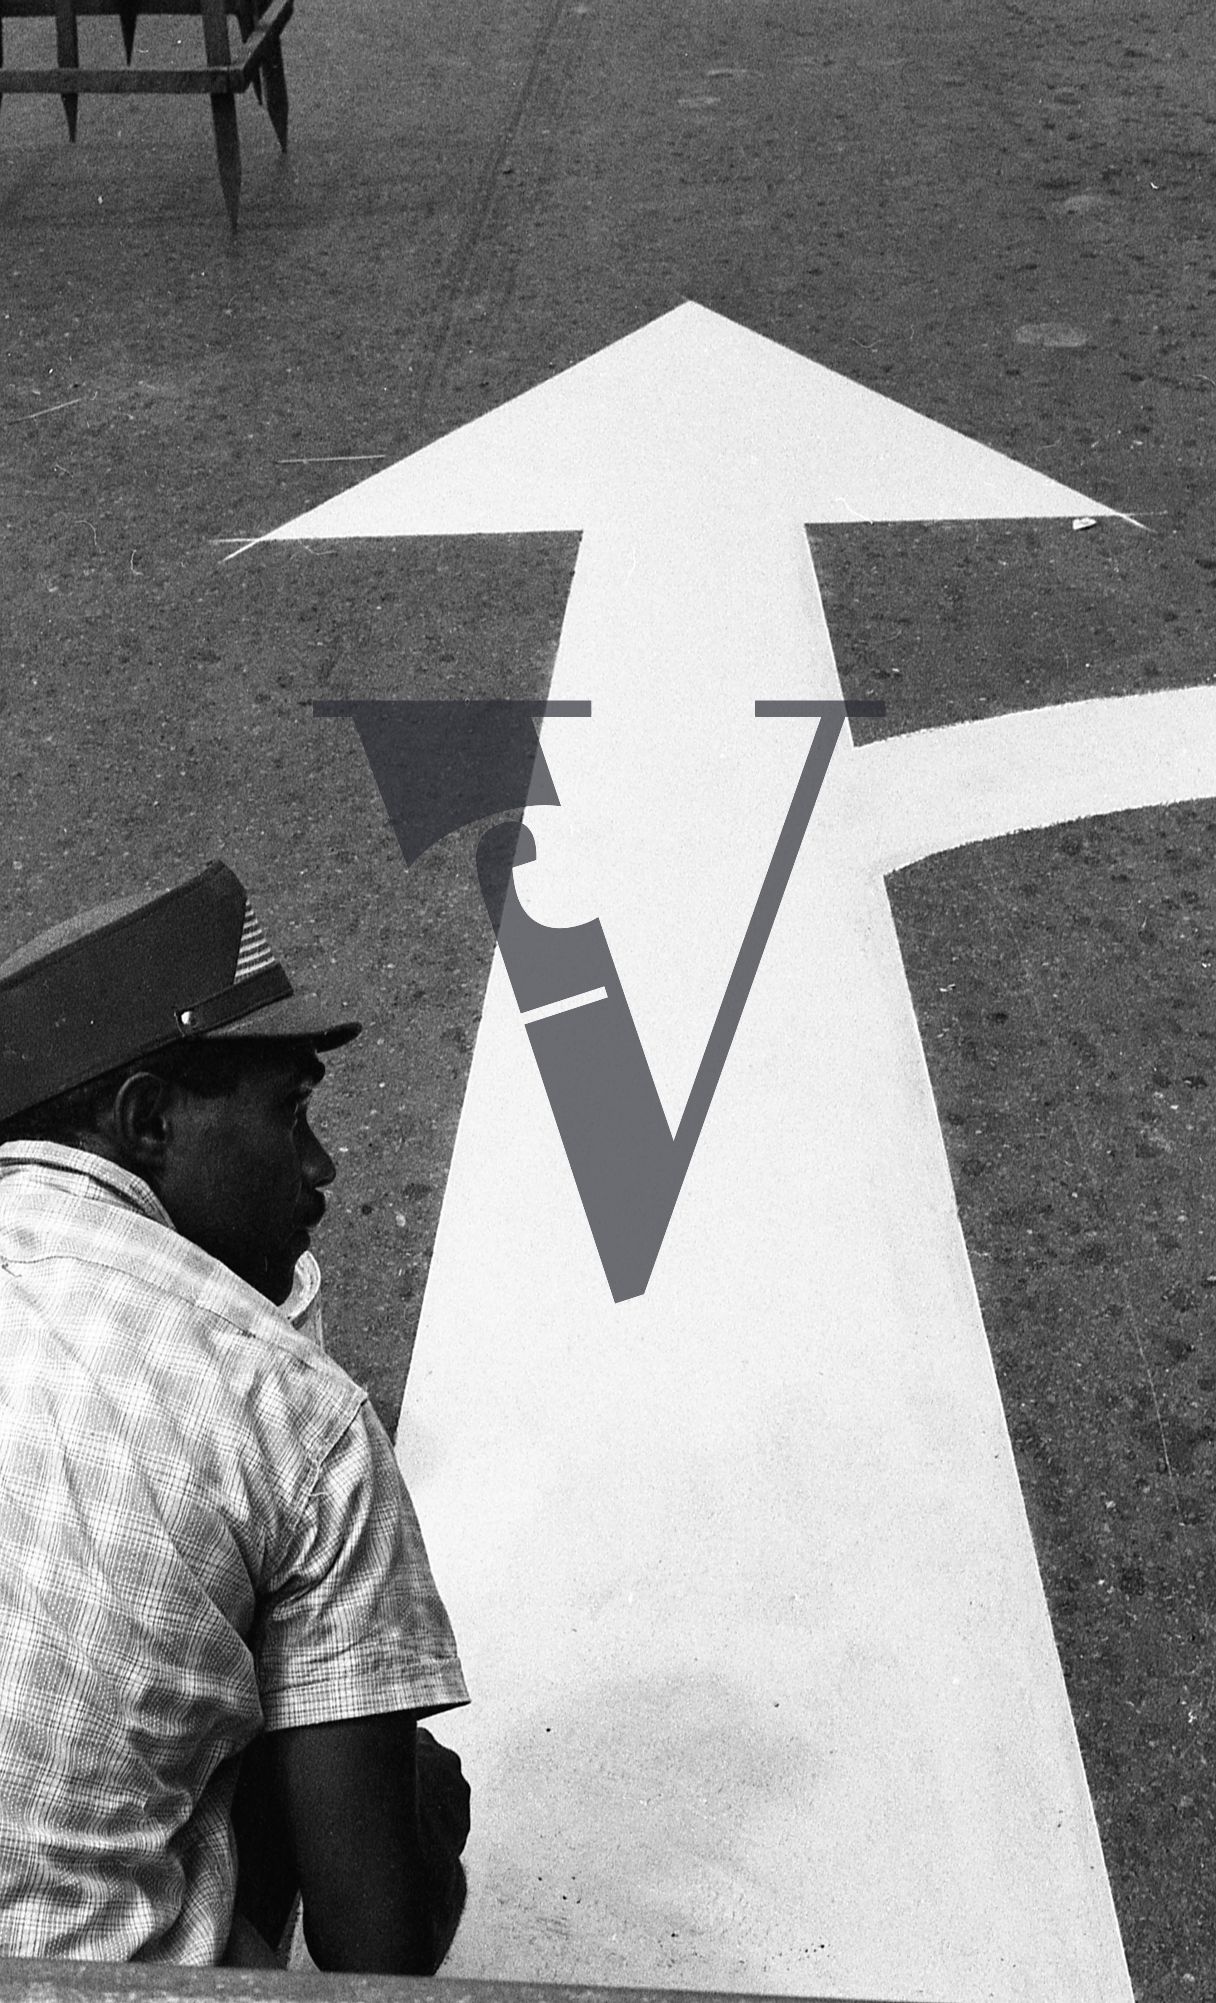 Dominican Republic, man painting road sign, forward.